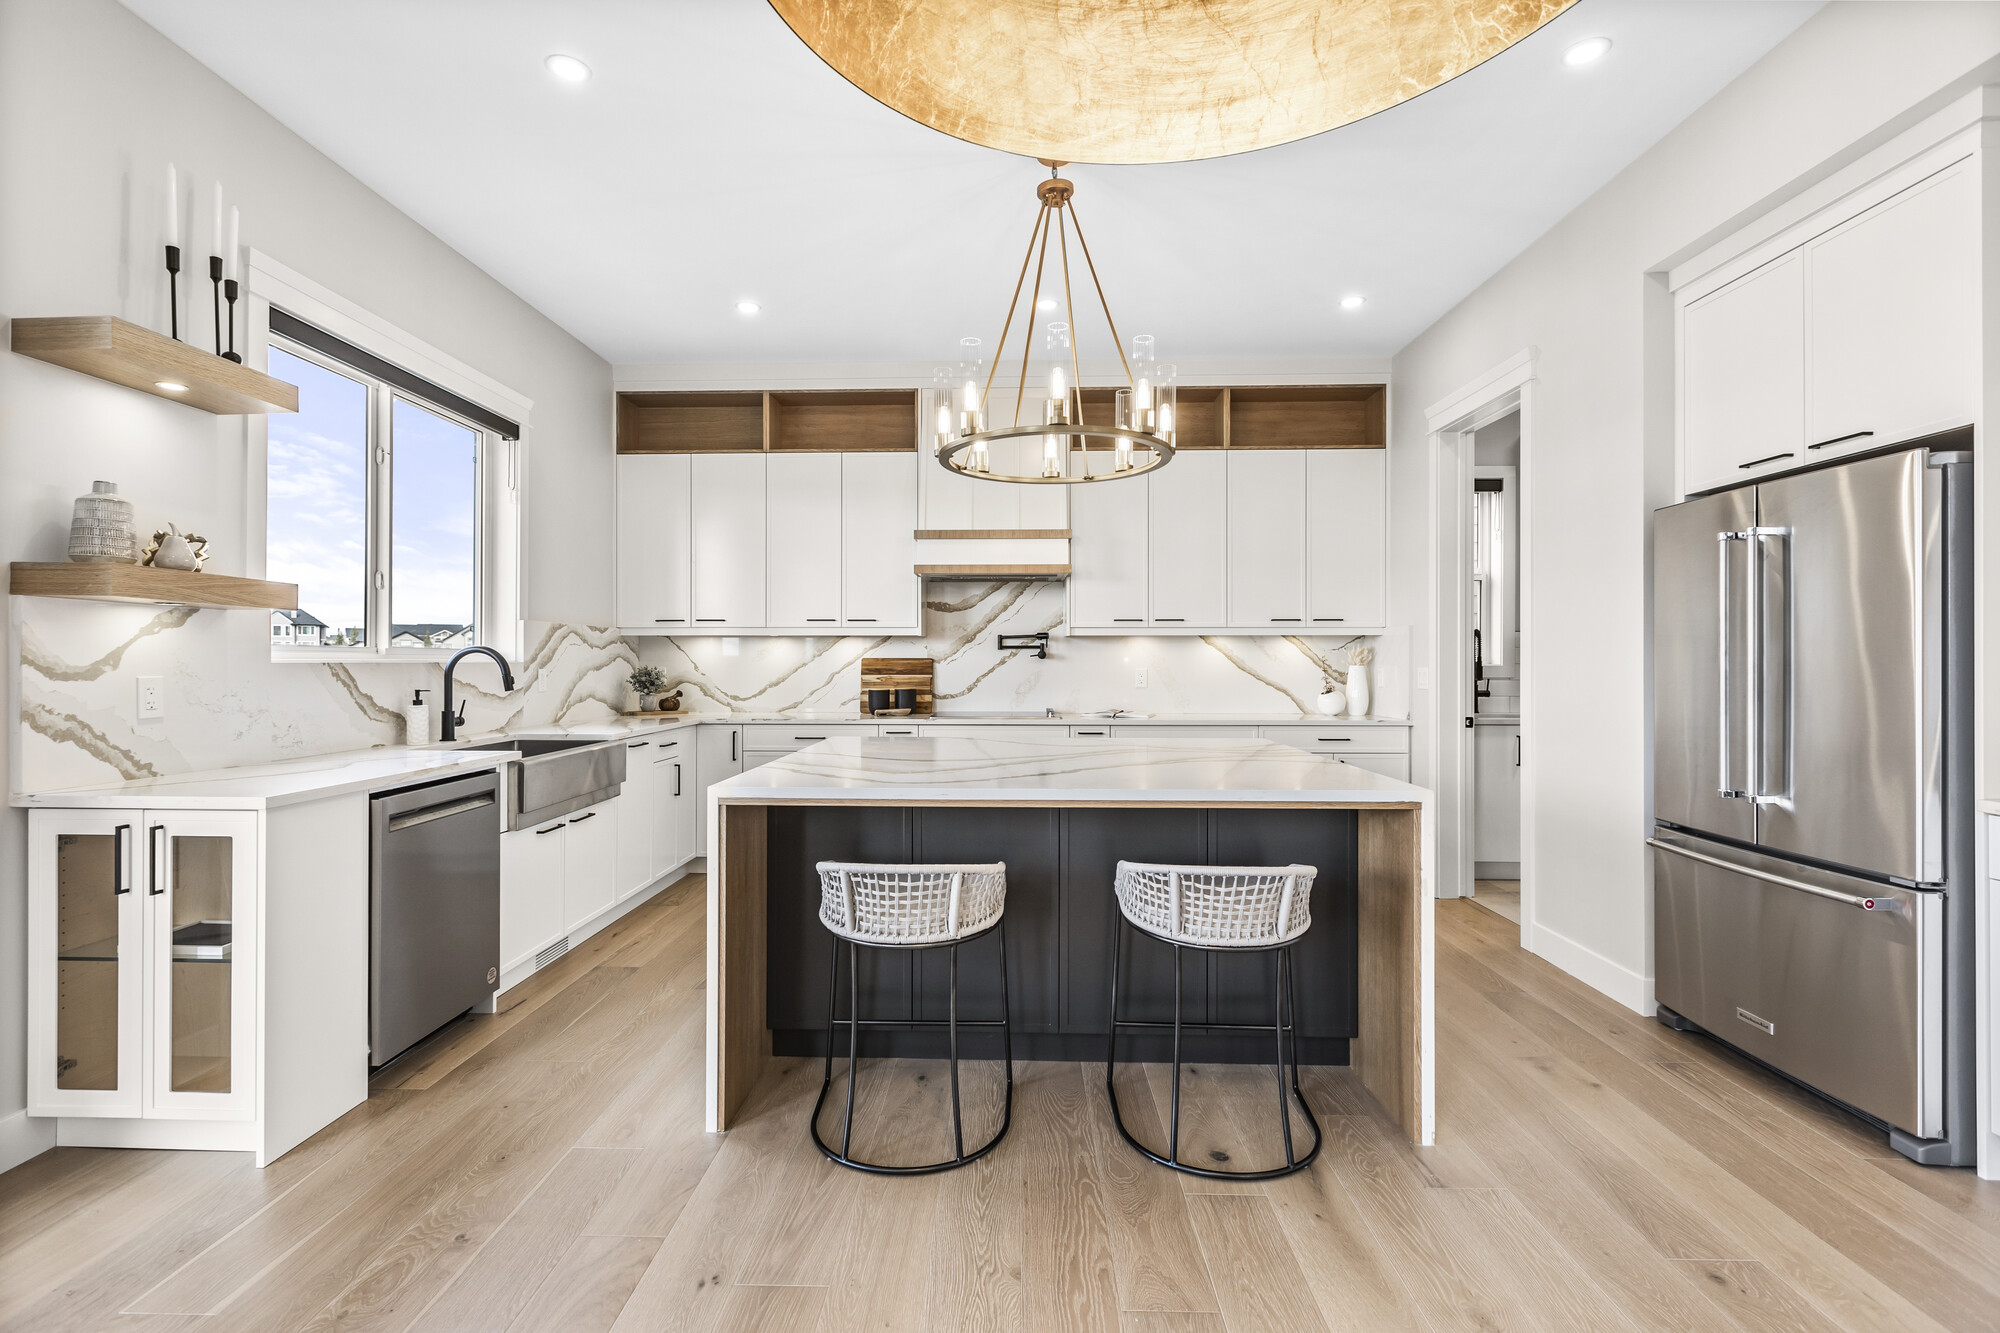 Light and bright white kitchen, modern show home kitchen with white oak cabinets and quartz countertops